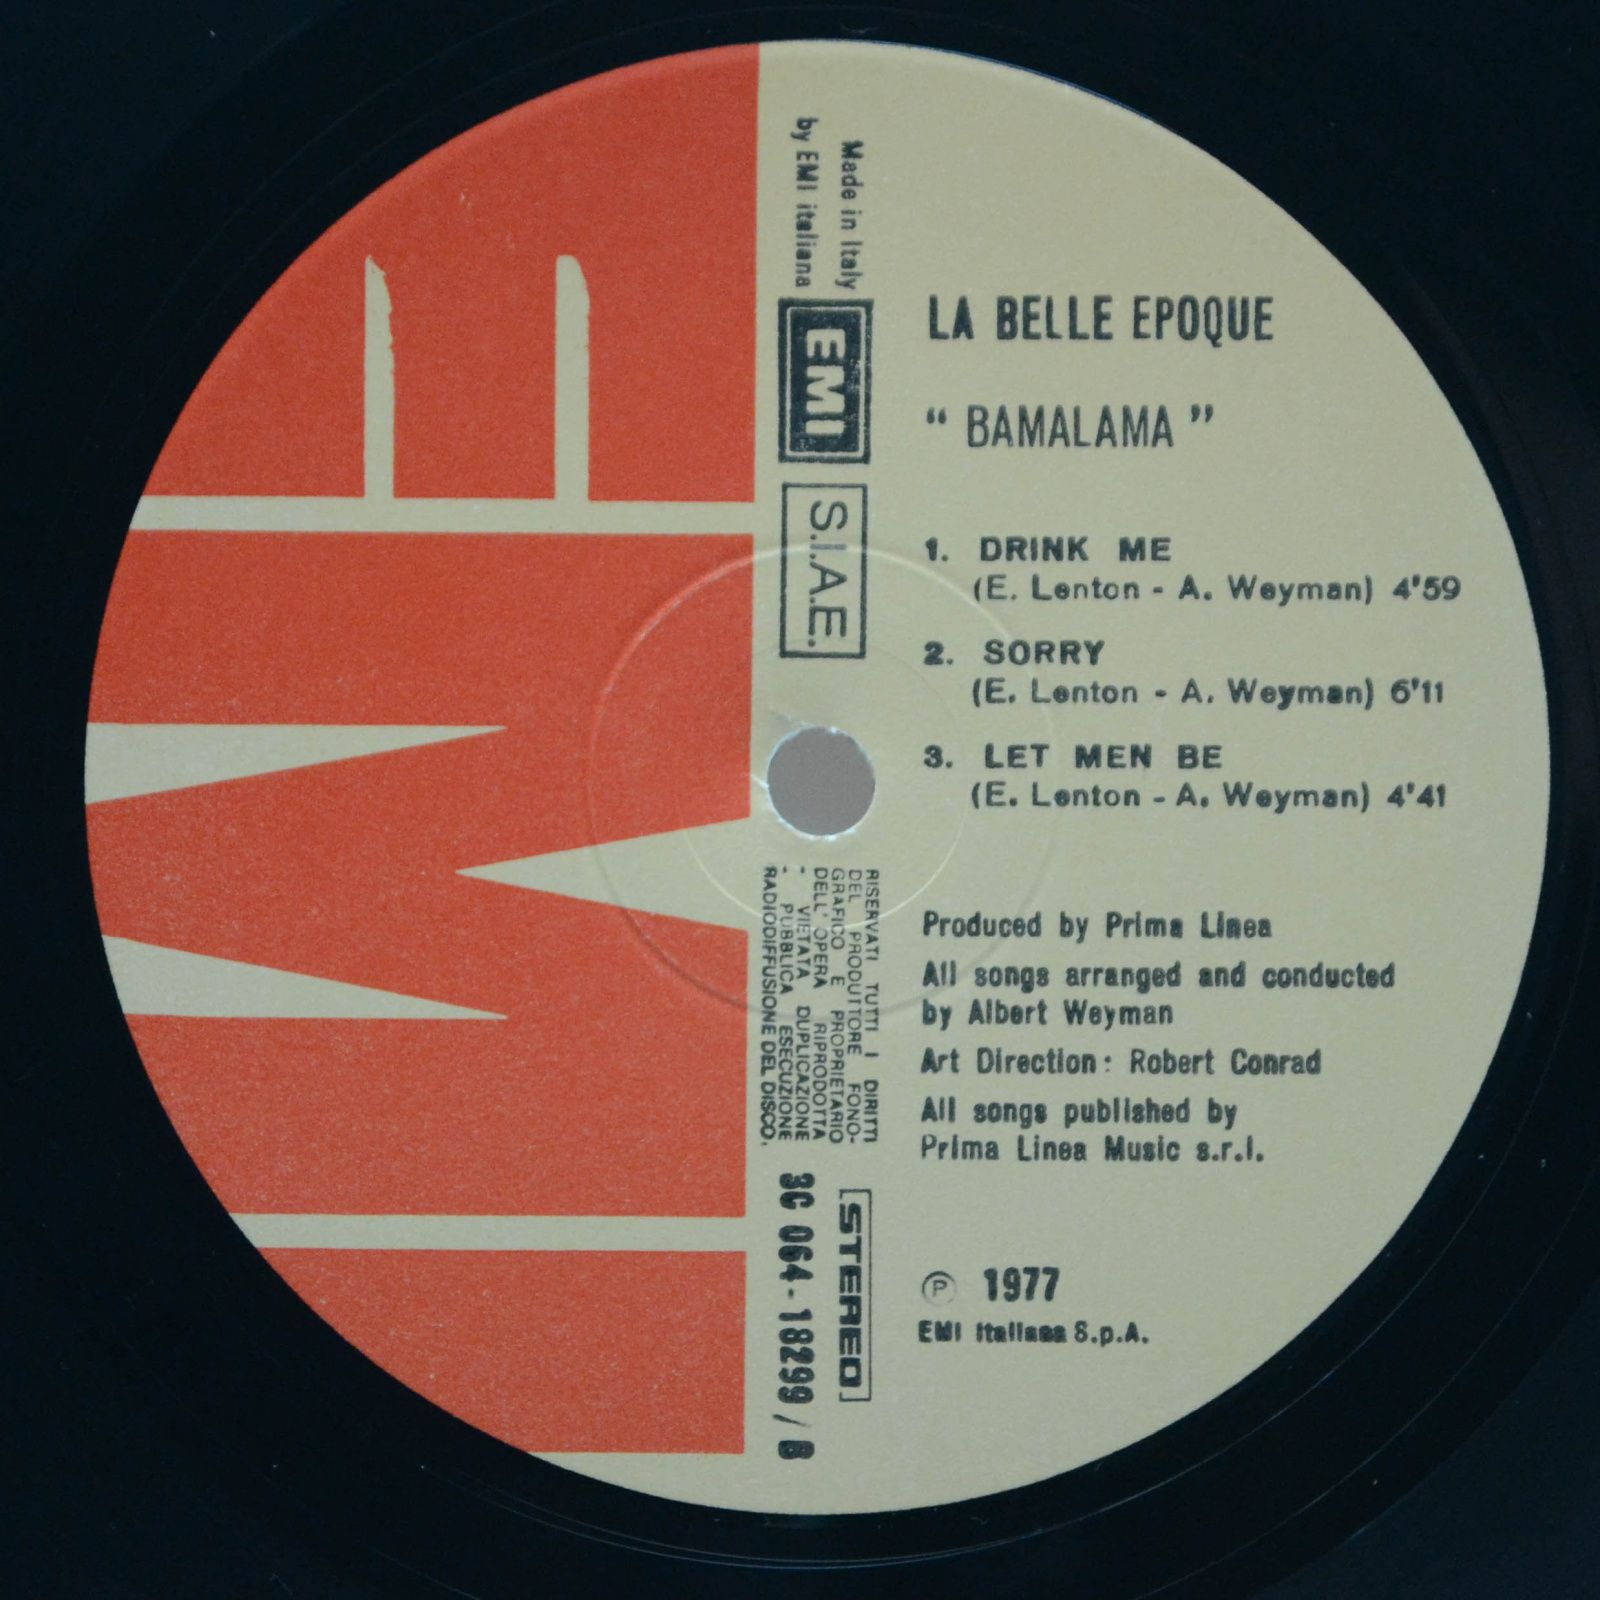 Belle Epoque — Bamalama, 1977